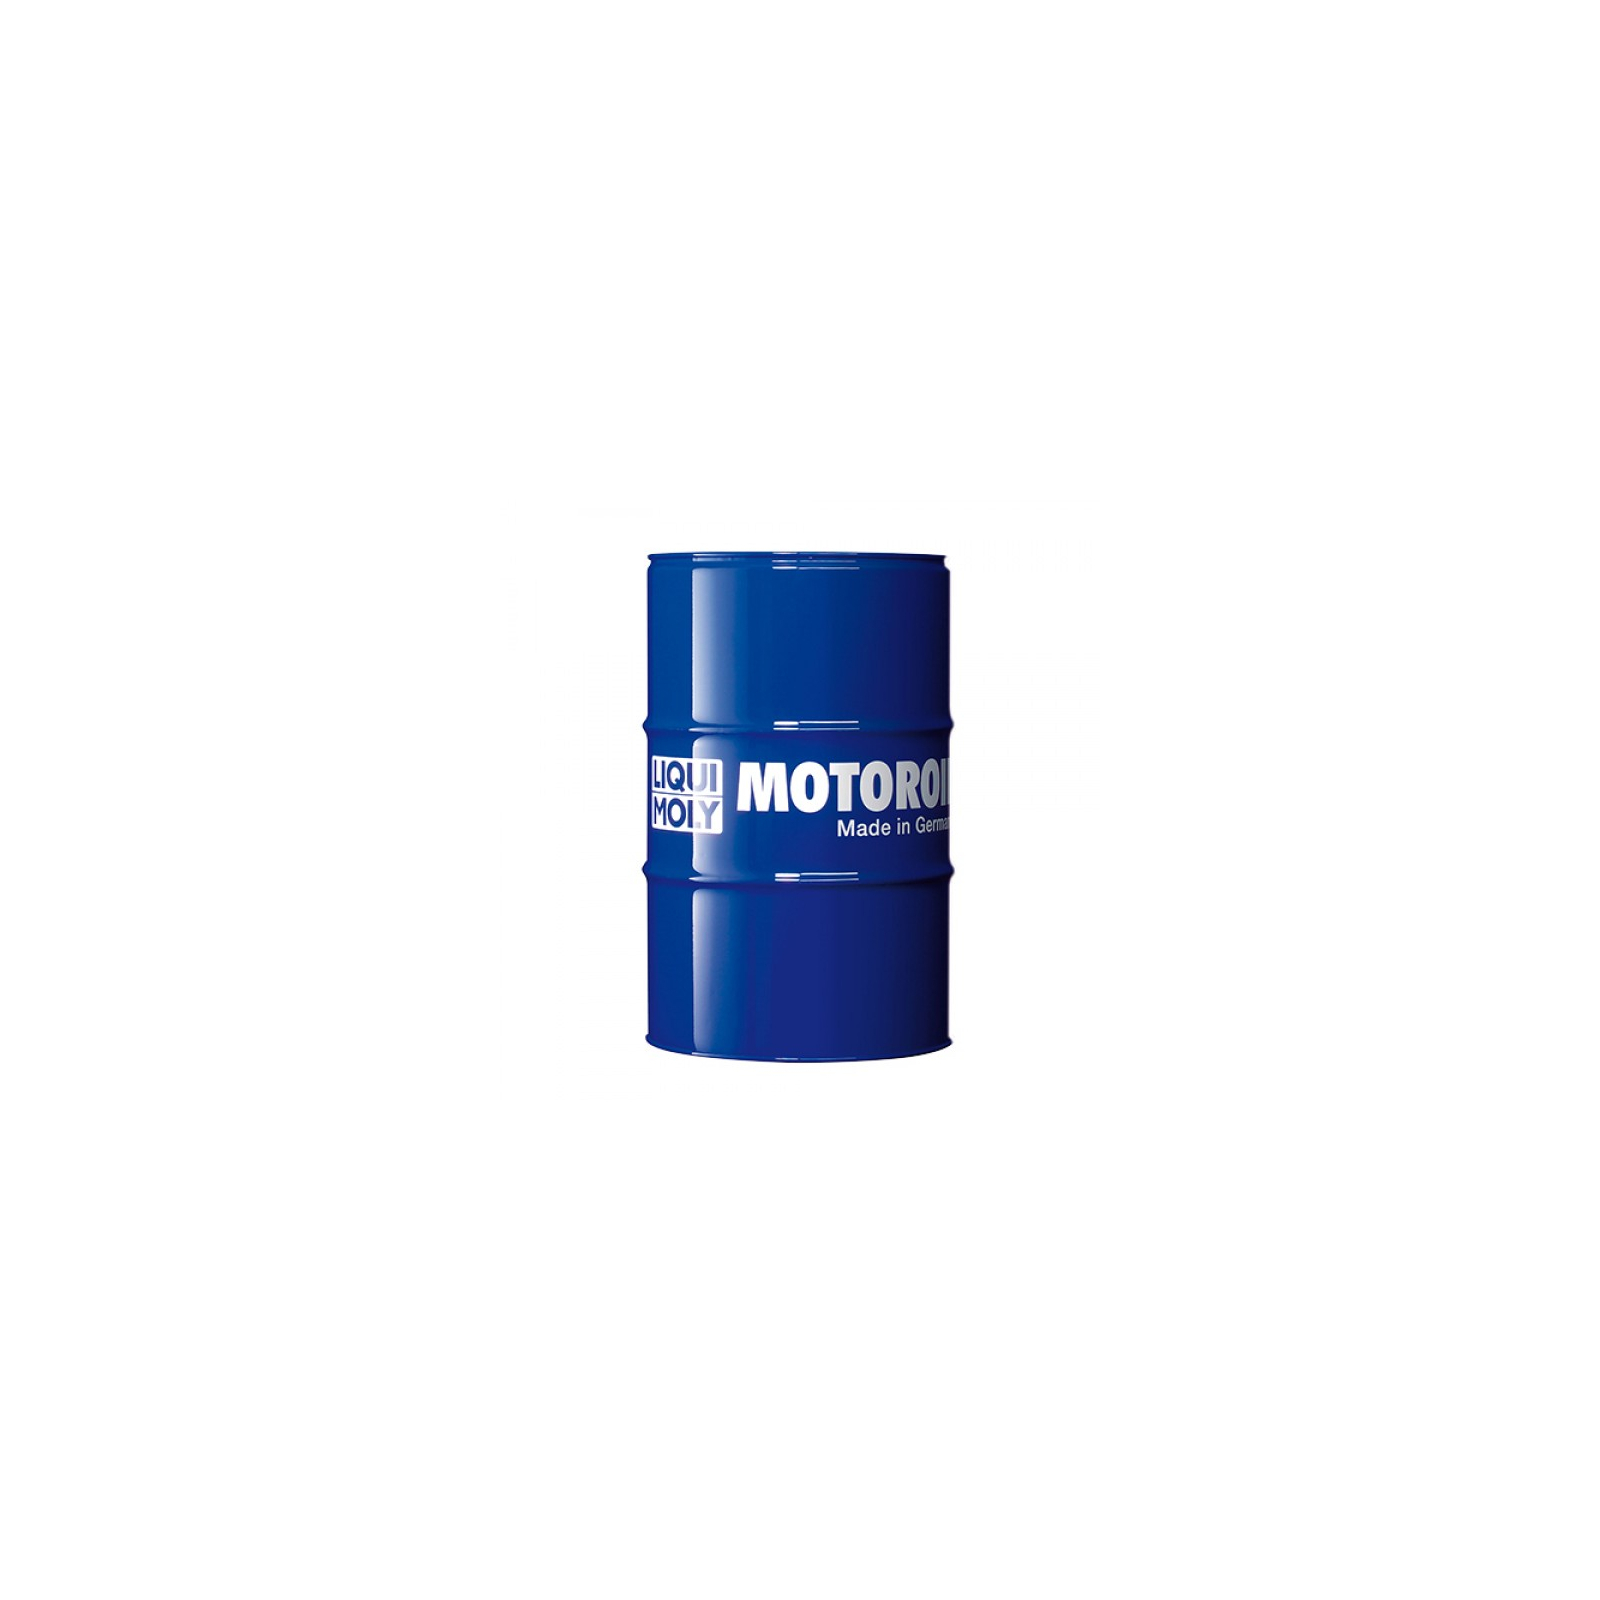 Моторное масло Liqui Moly Top Tec 4200 SAE 5W-30  60л. (3709)